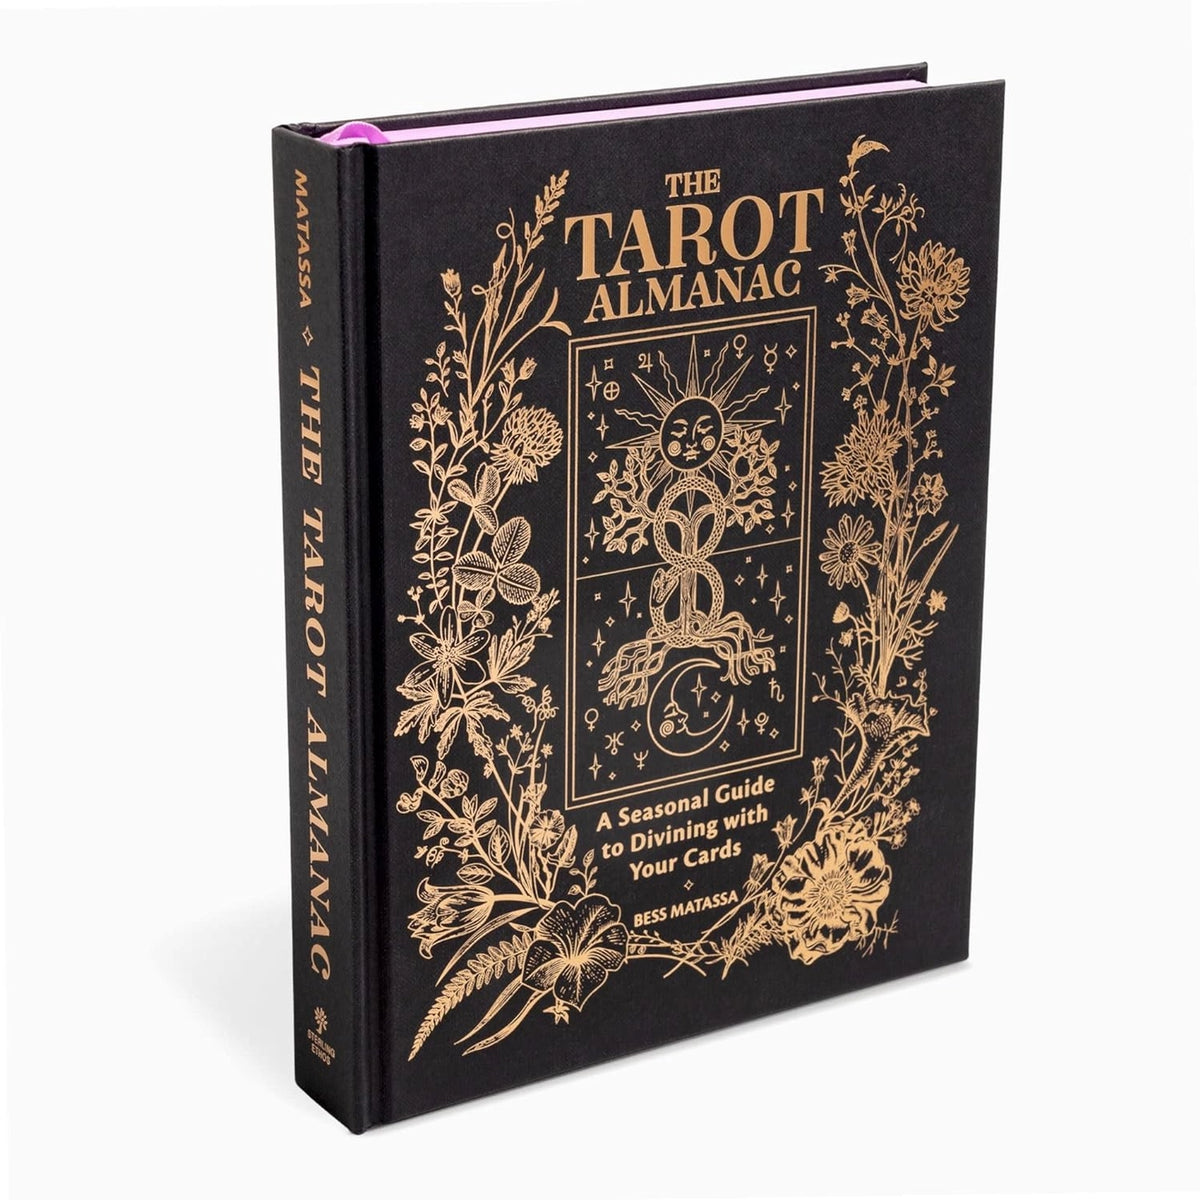 The Tarot Almanac: A Seasonal Guide To Divining